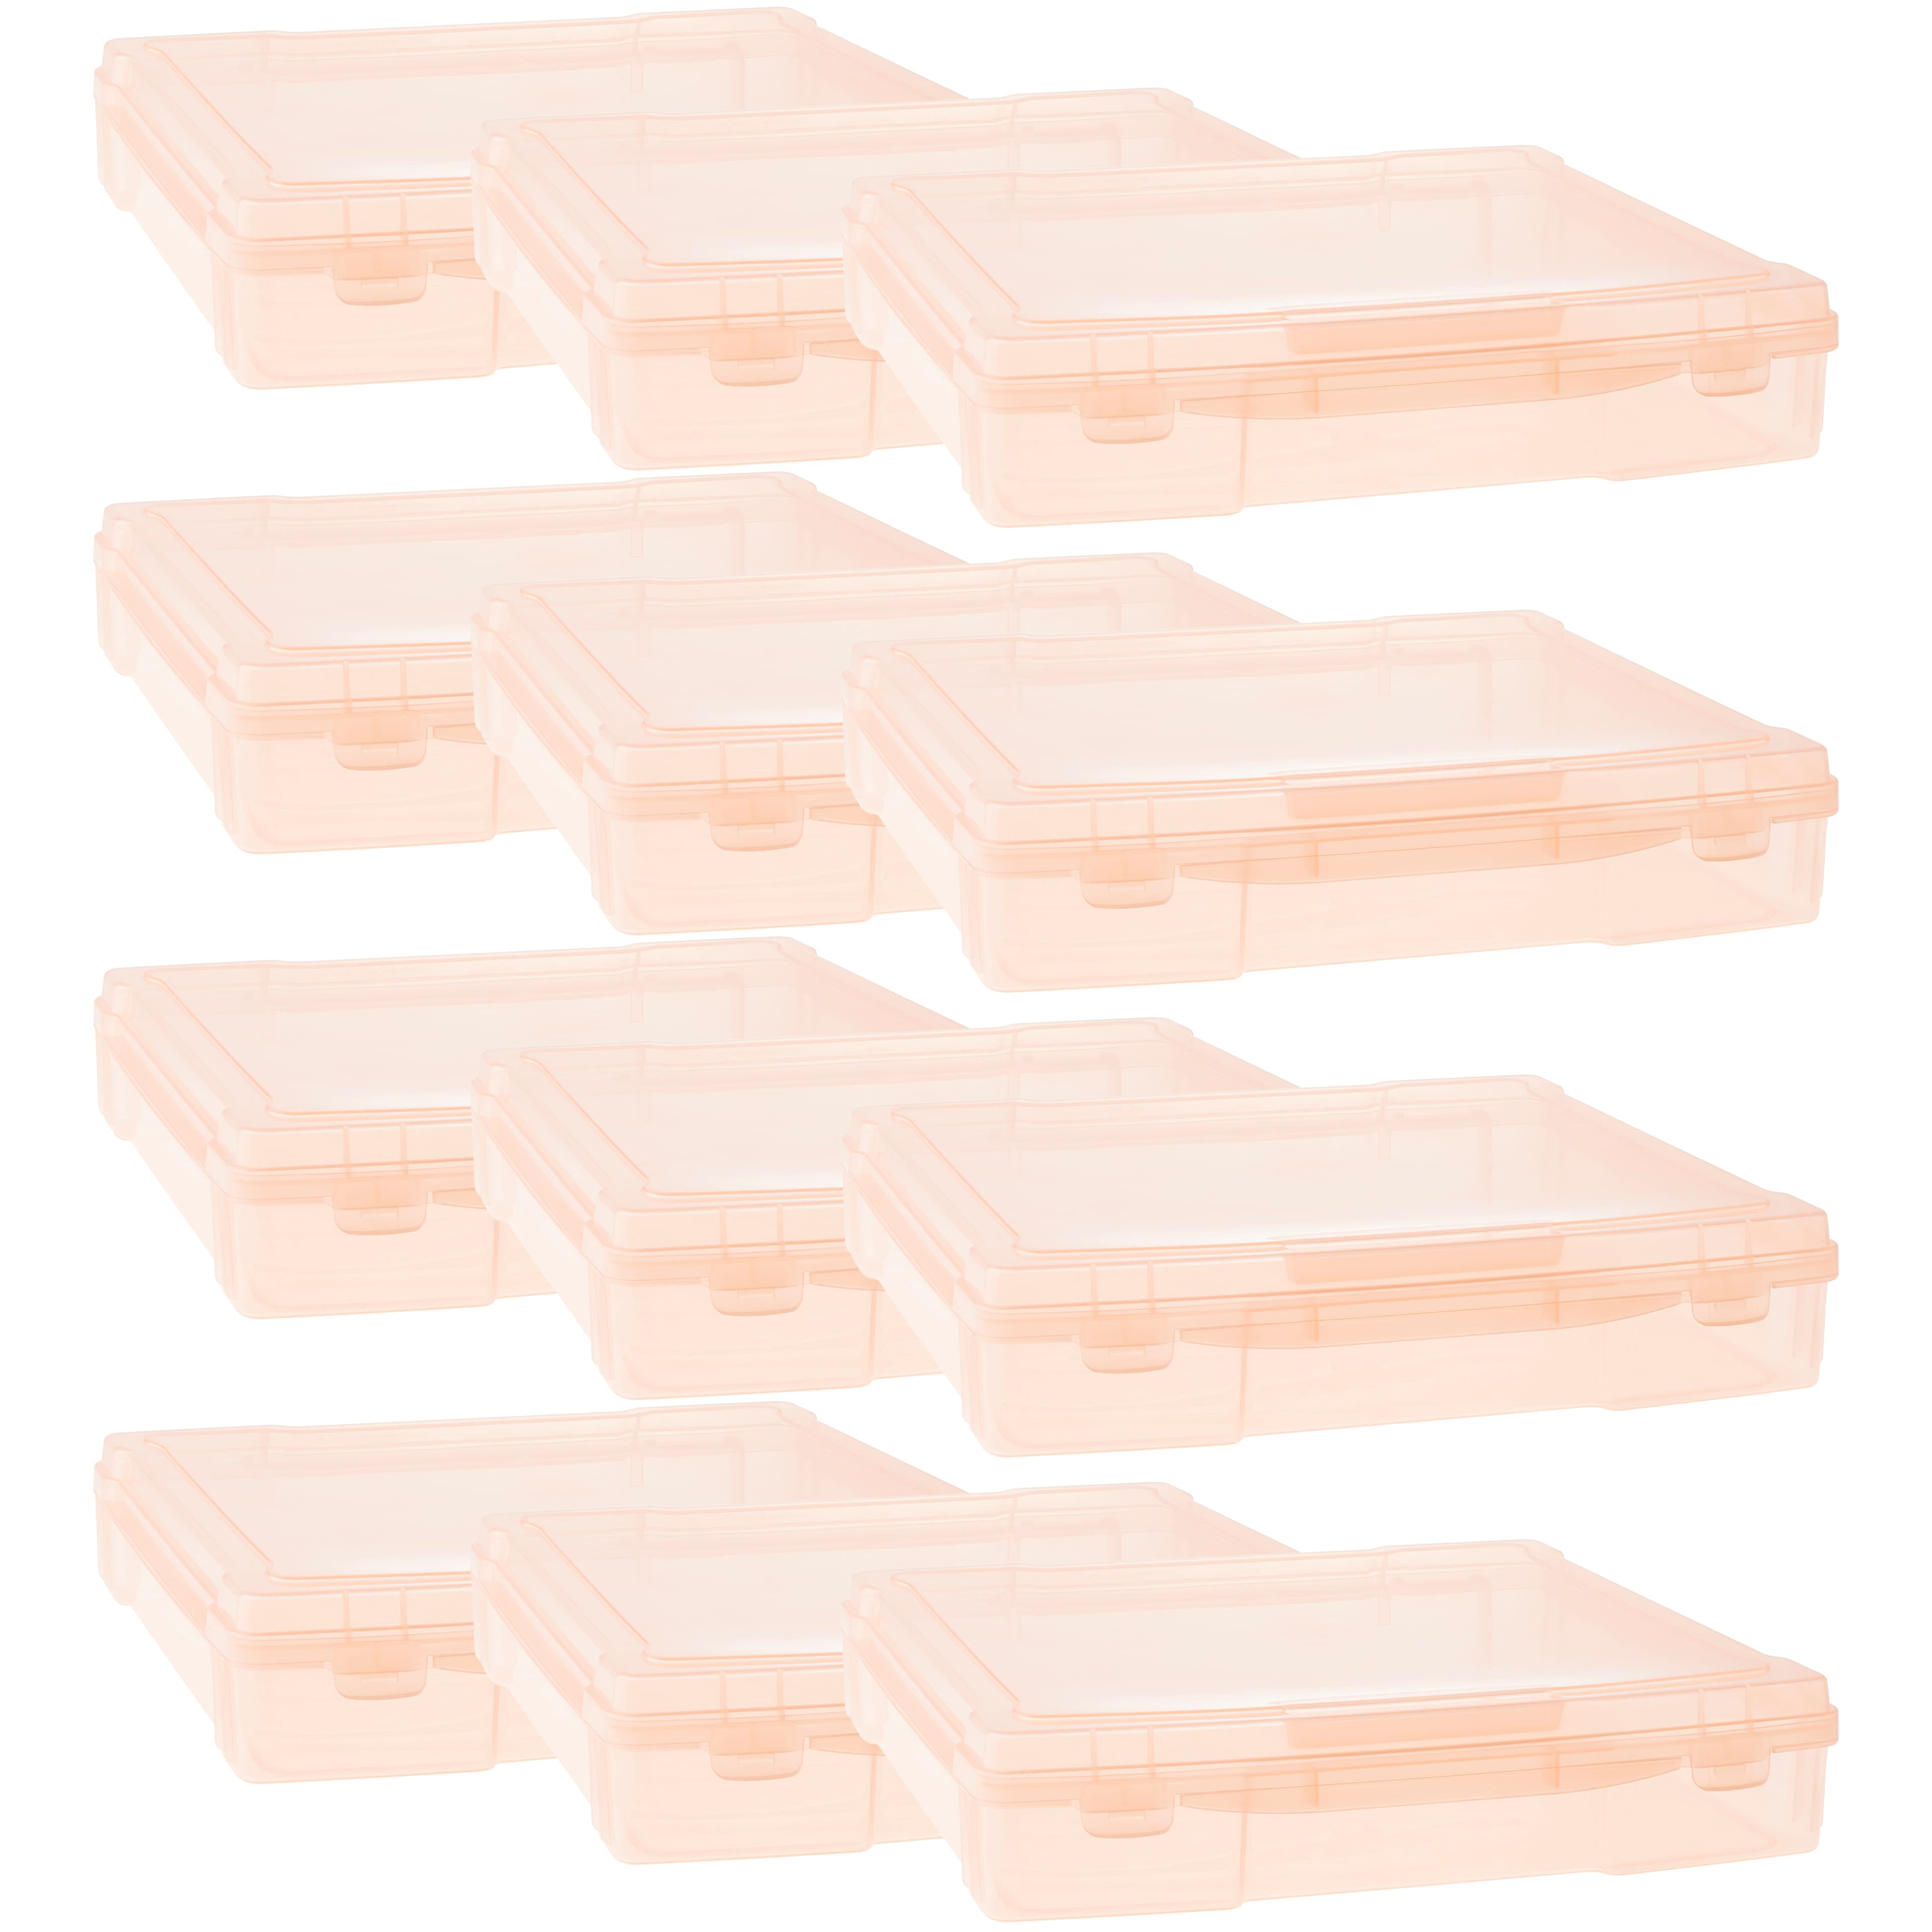  Simply Tidy 12” x 12” Plastic Scrapbook Storage Case